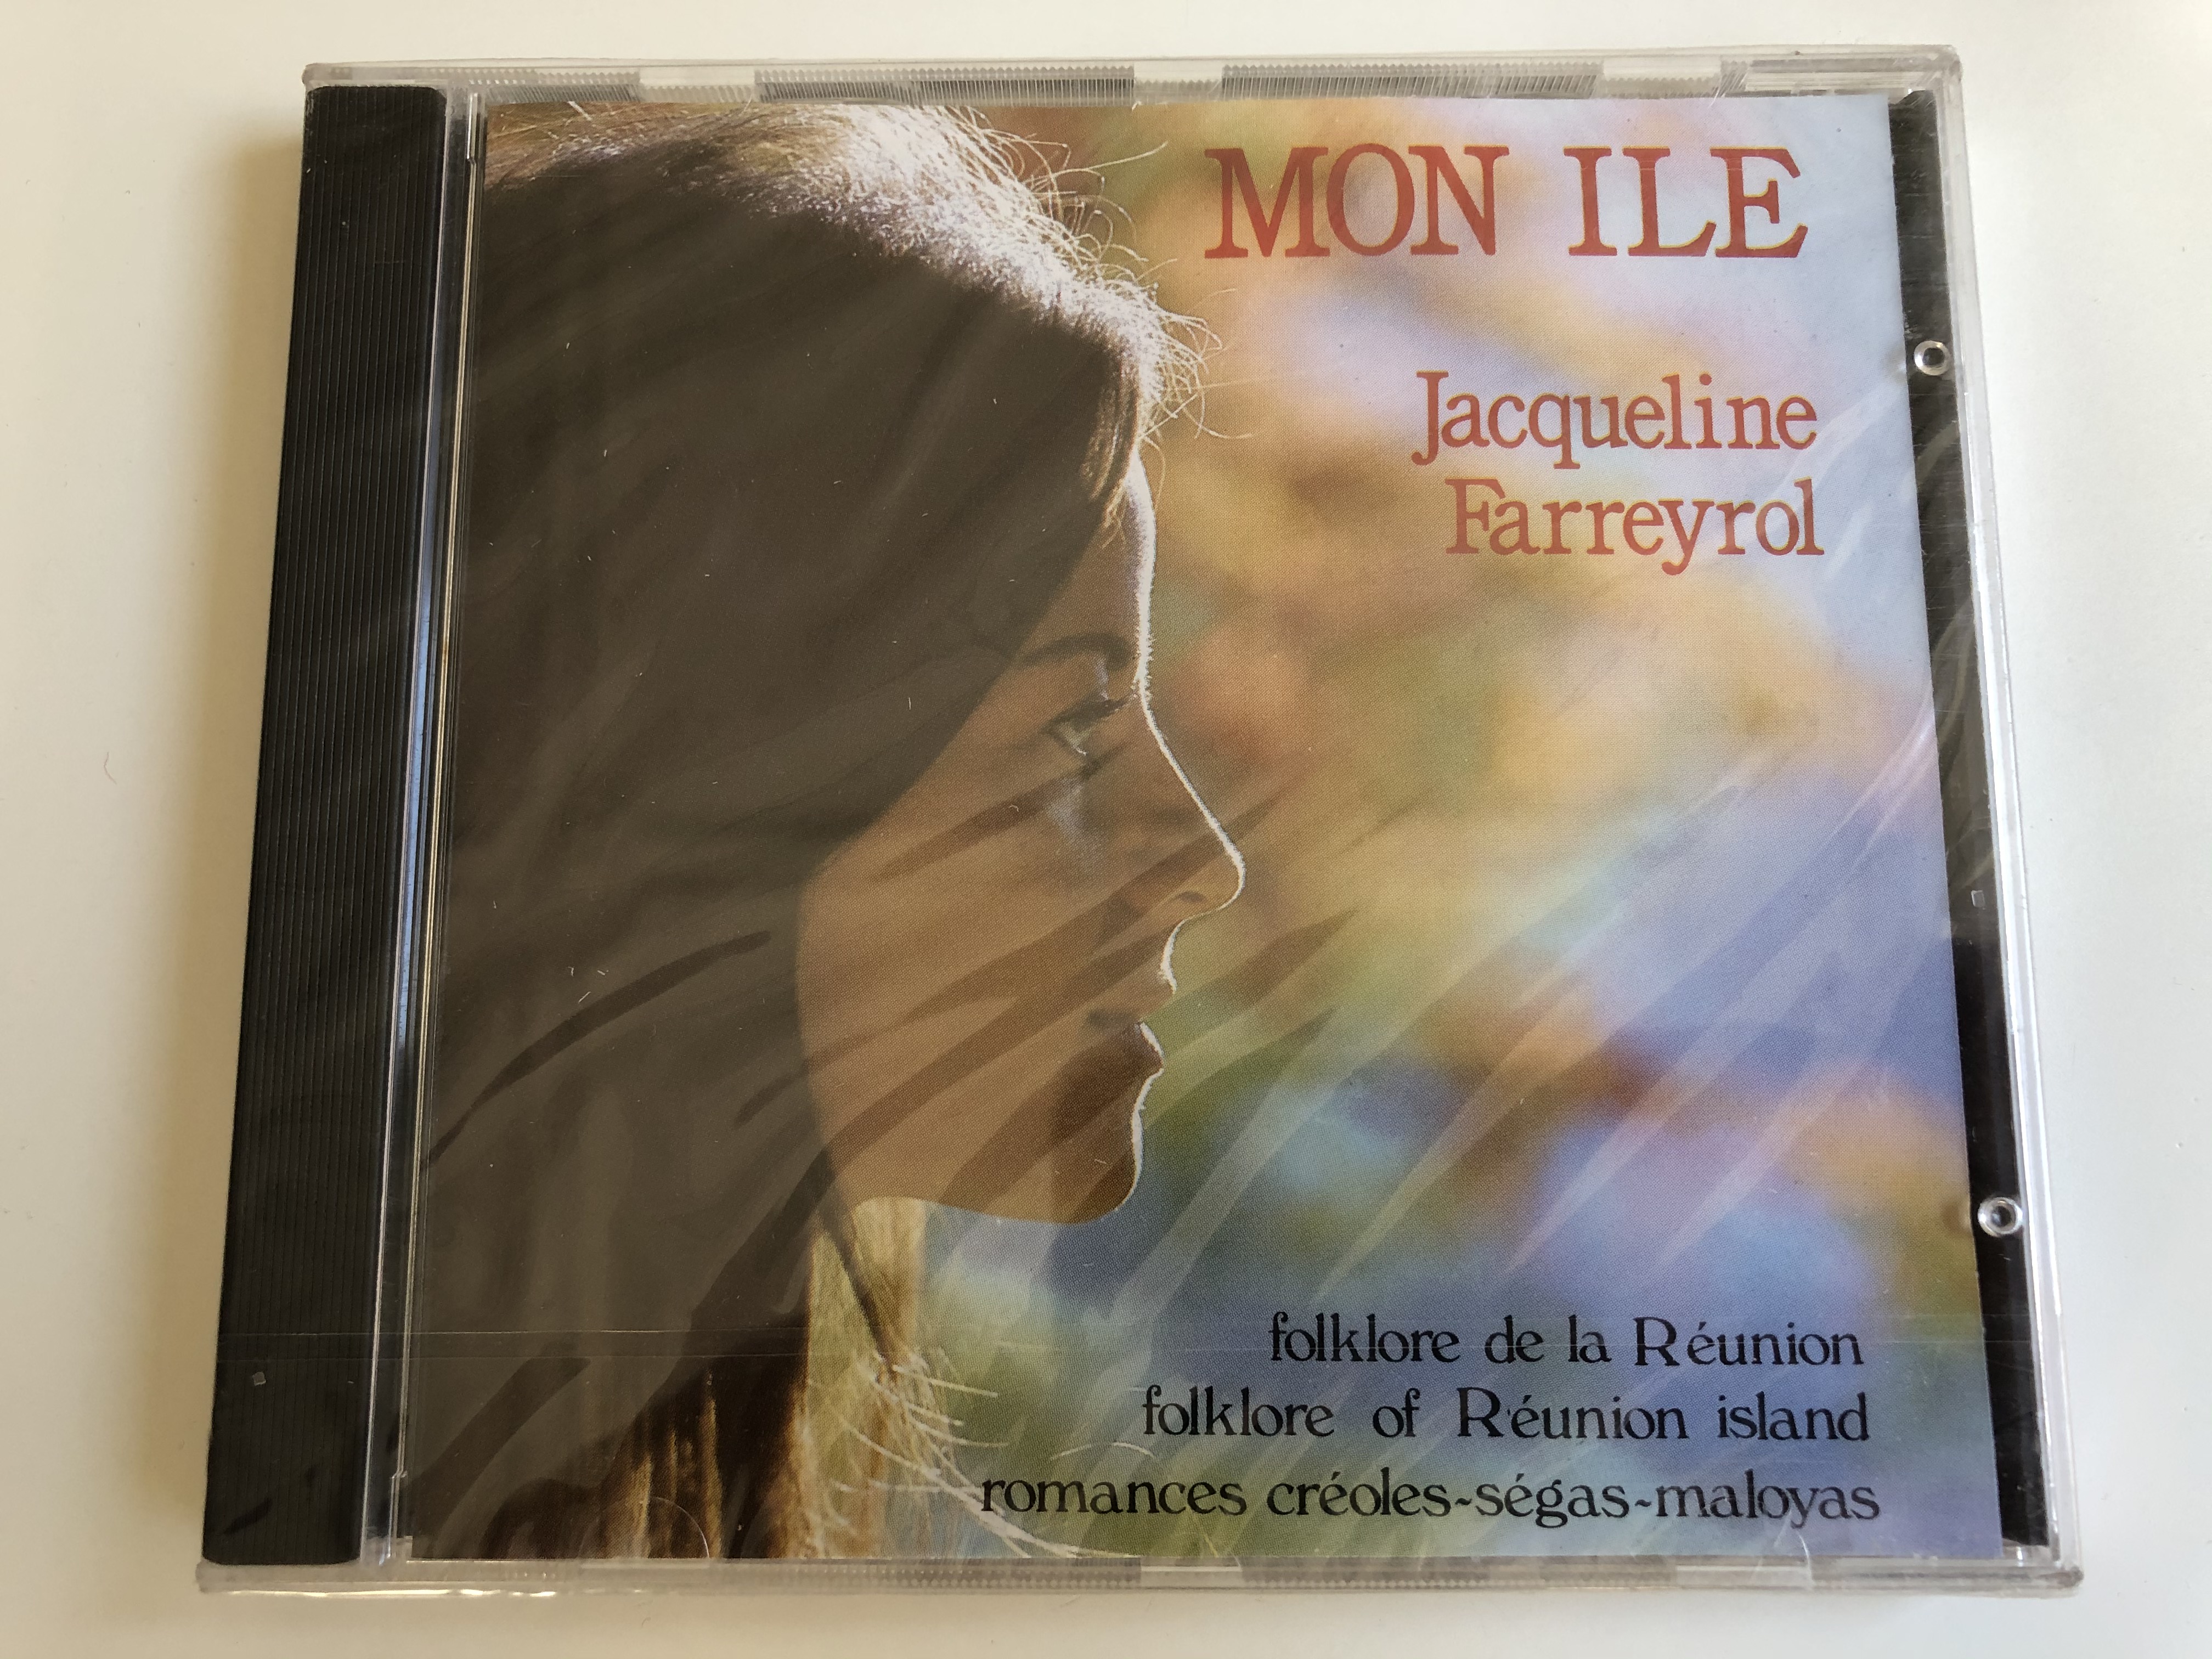 mon-ile-jacqueline-farreyrol-folklore-de-la-reunion-folklore-of-reunion-island-romances-creoles-segas-maloyas-auvidis-ethnic-audio-cd-1989-b-6155-1-.jpg